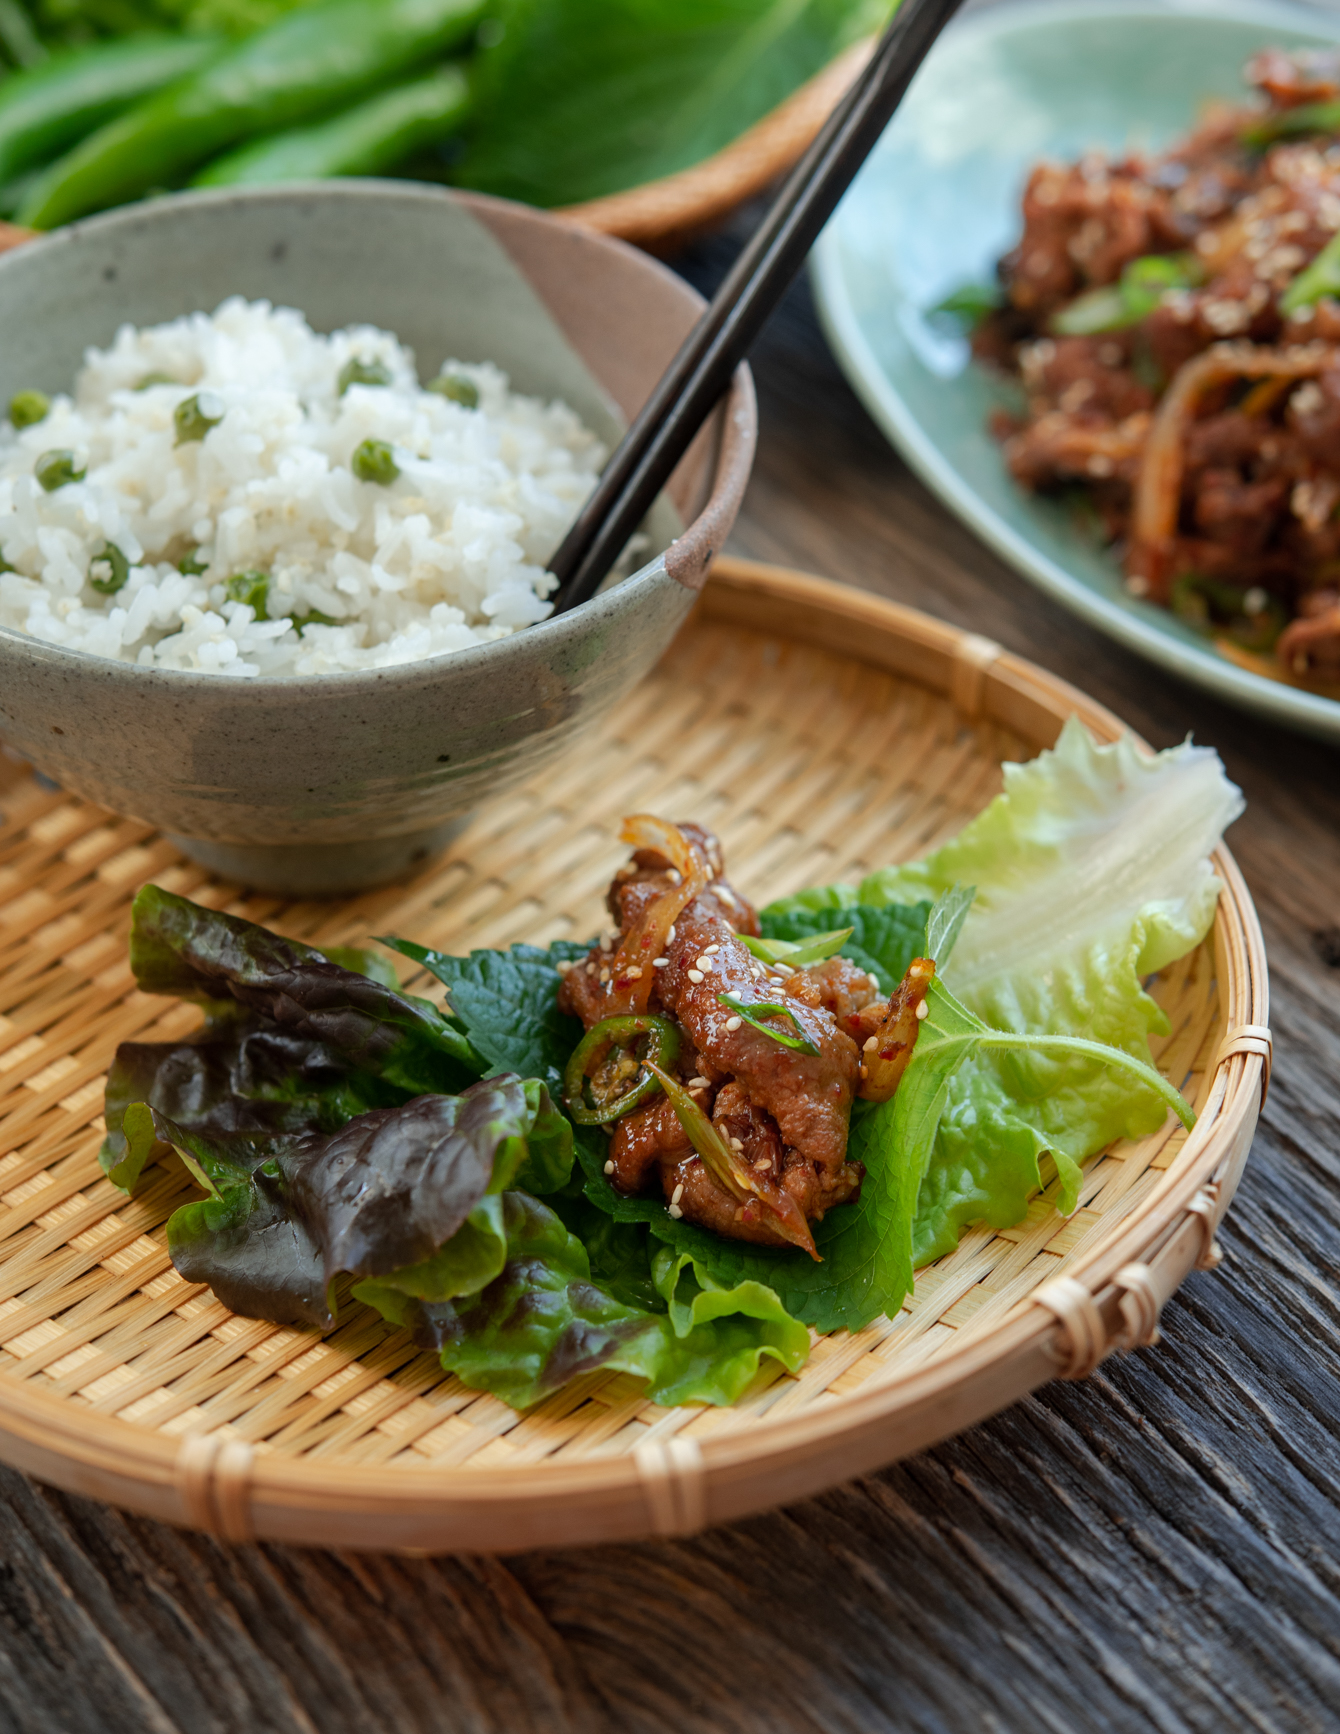 Korean spicy pork bulgogi with a lettuce wrap and rice.